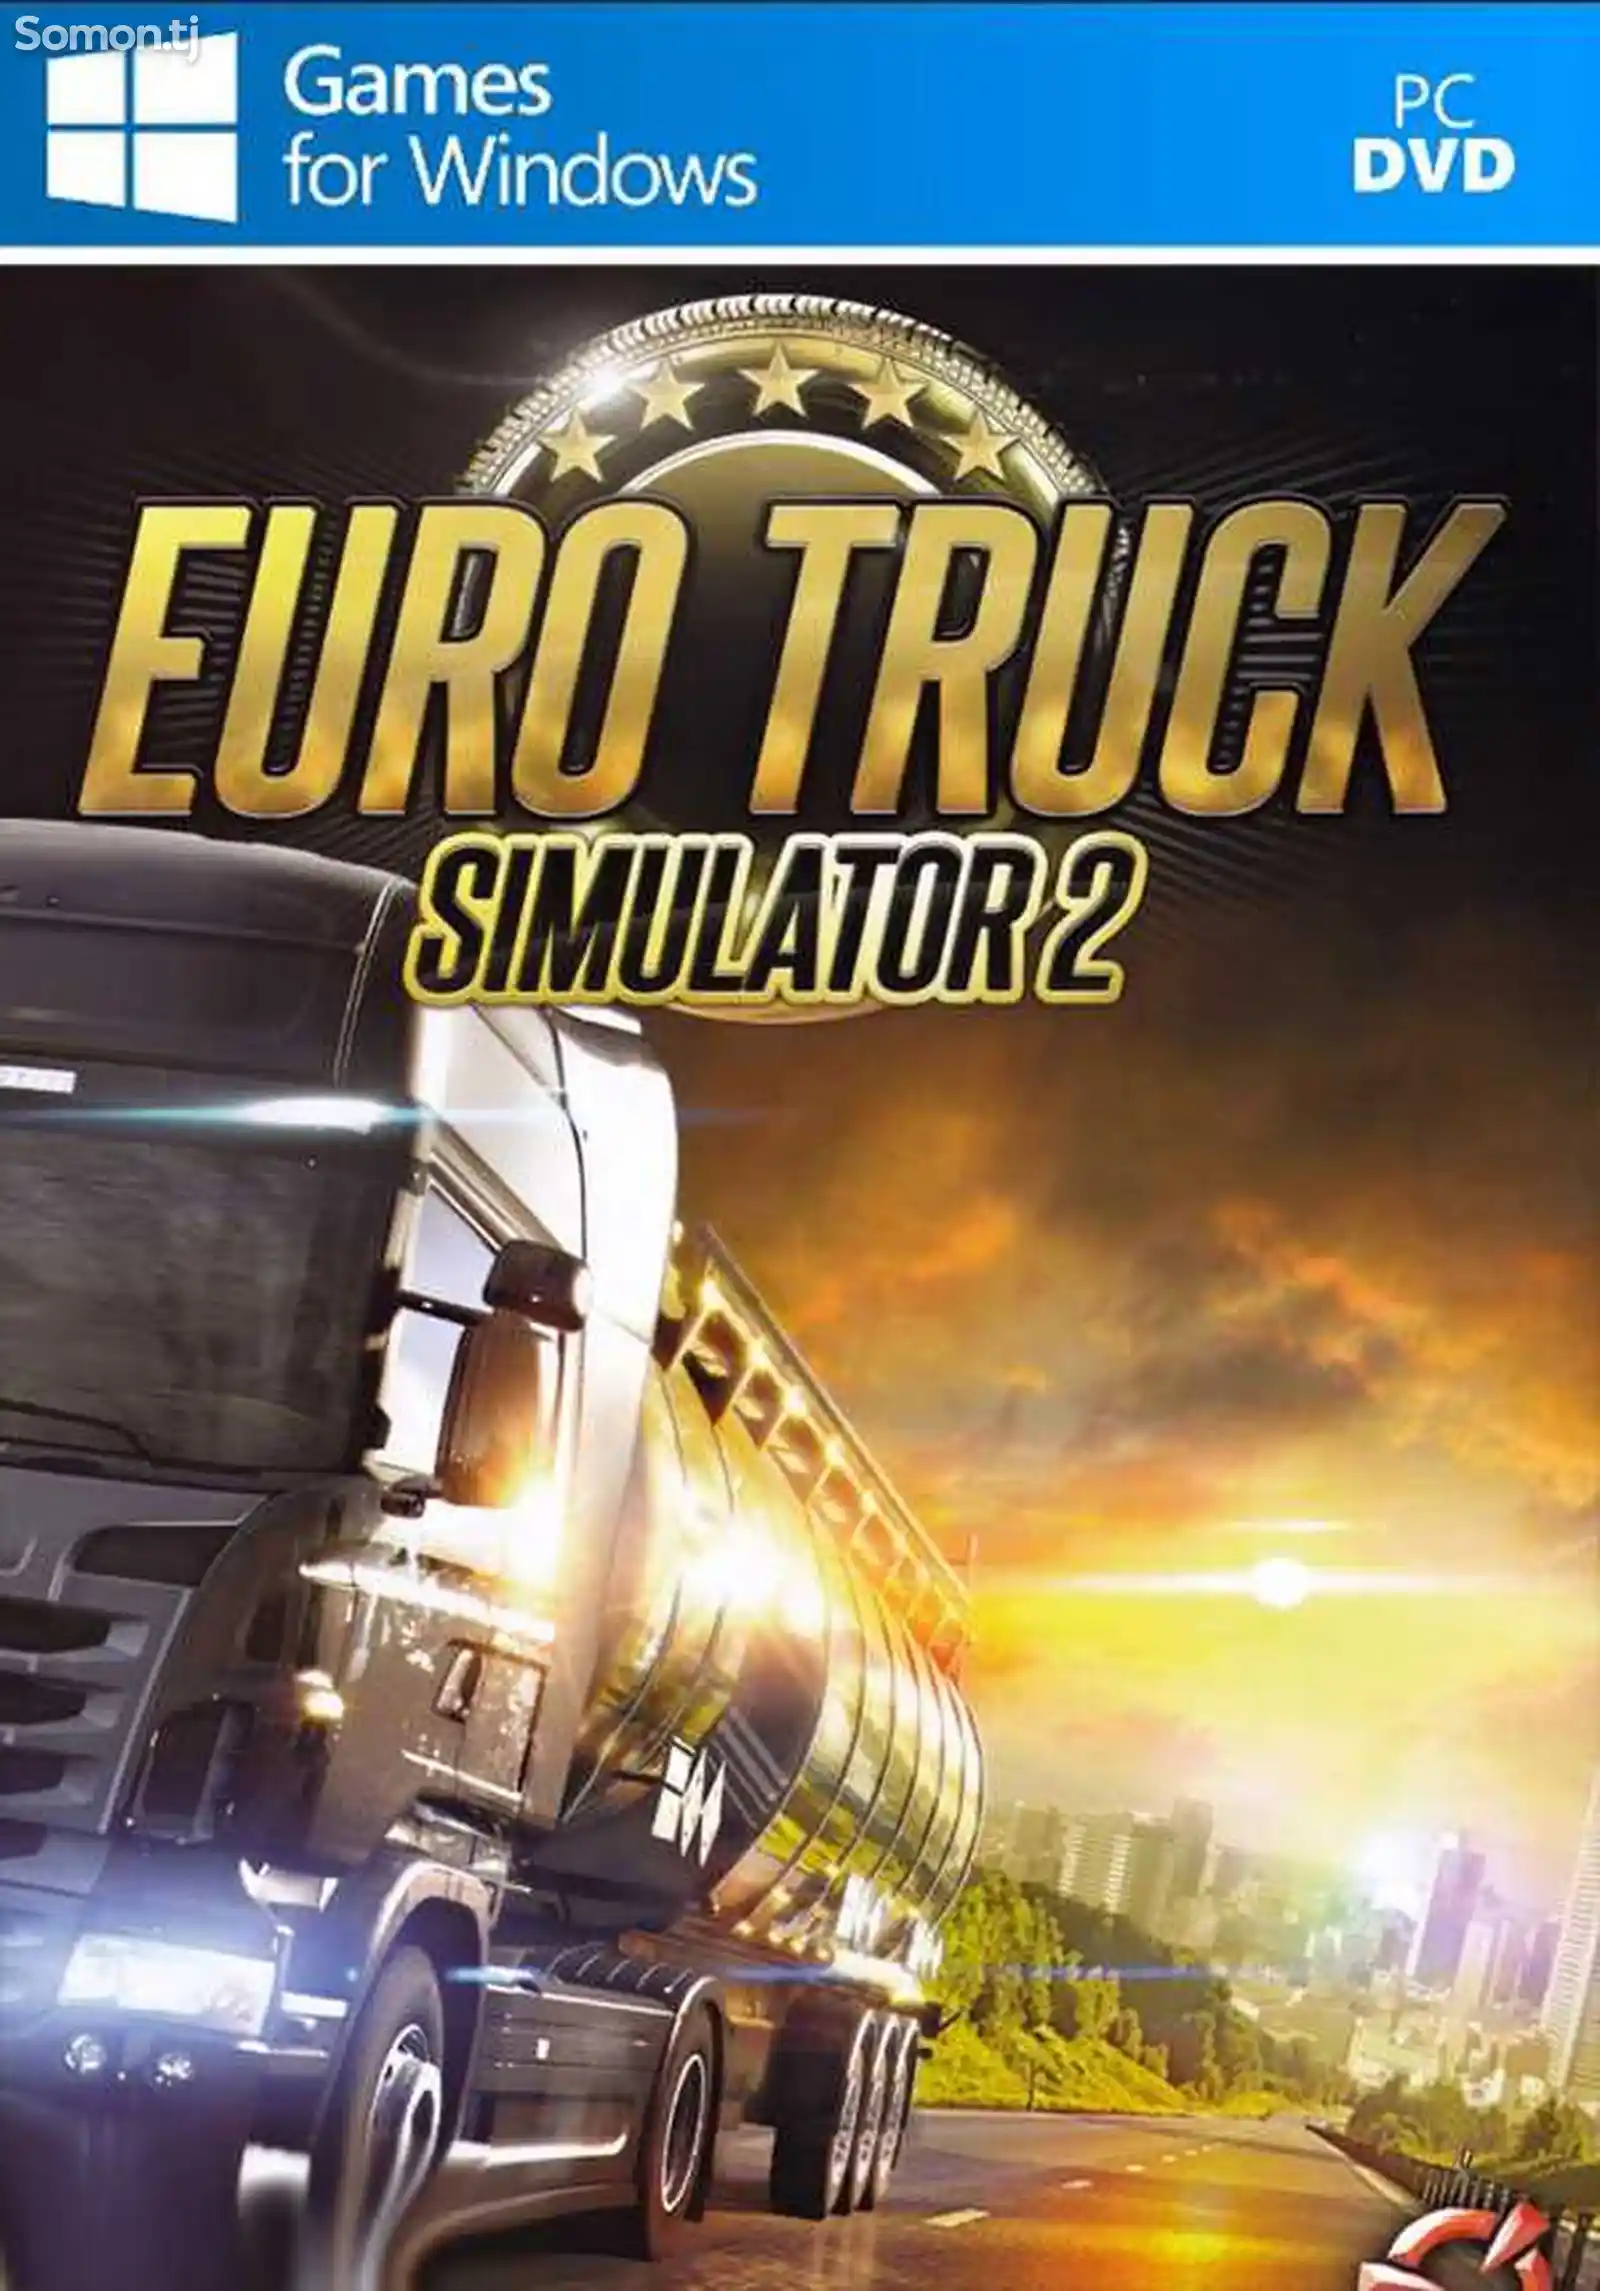 Игра Euro truck simulator 2 компьютера-пк-pc-1